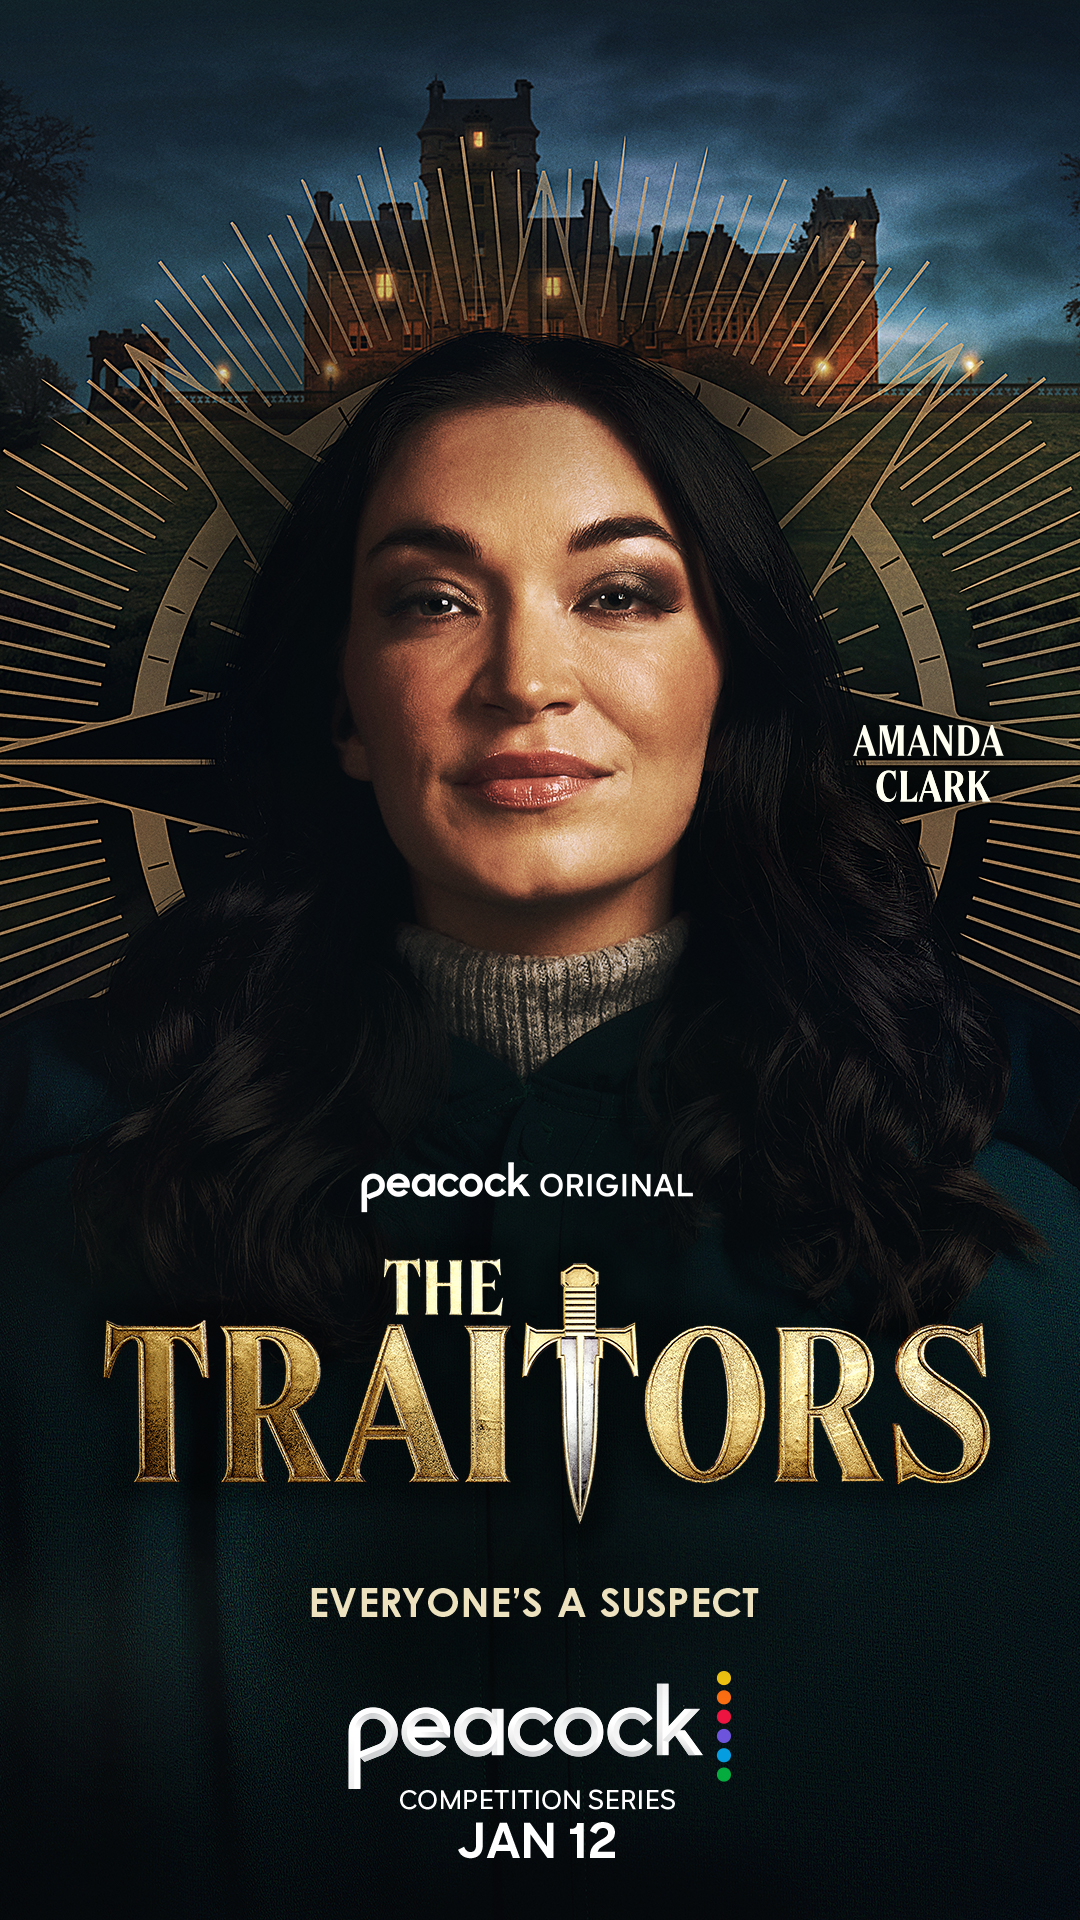 Amanda Clark for 'The Traitors'